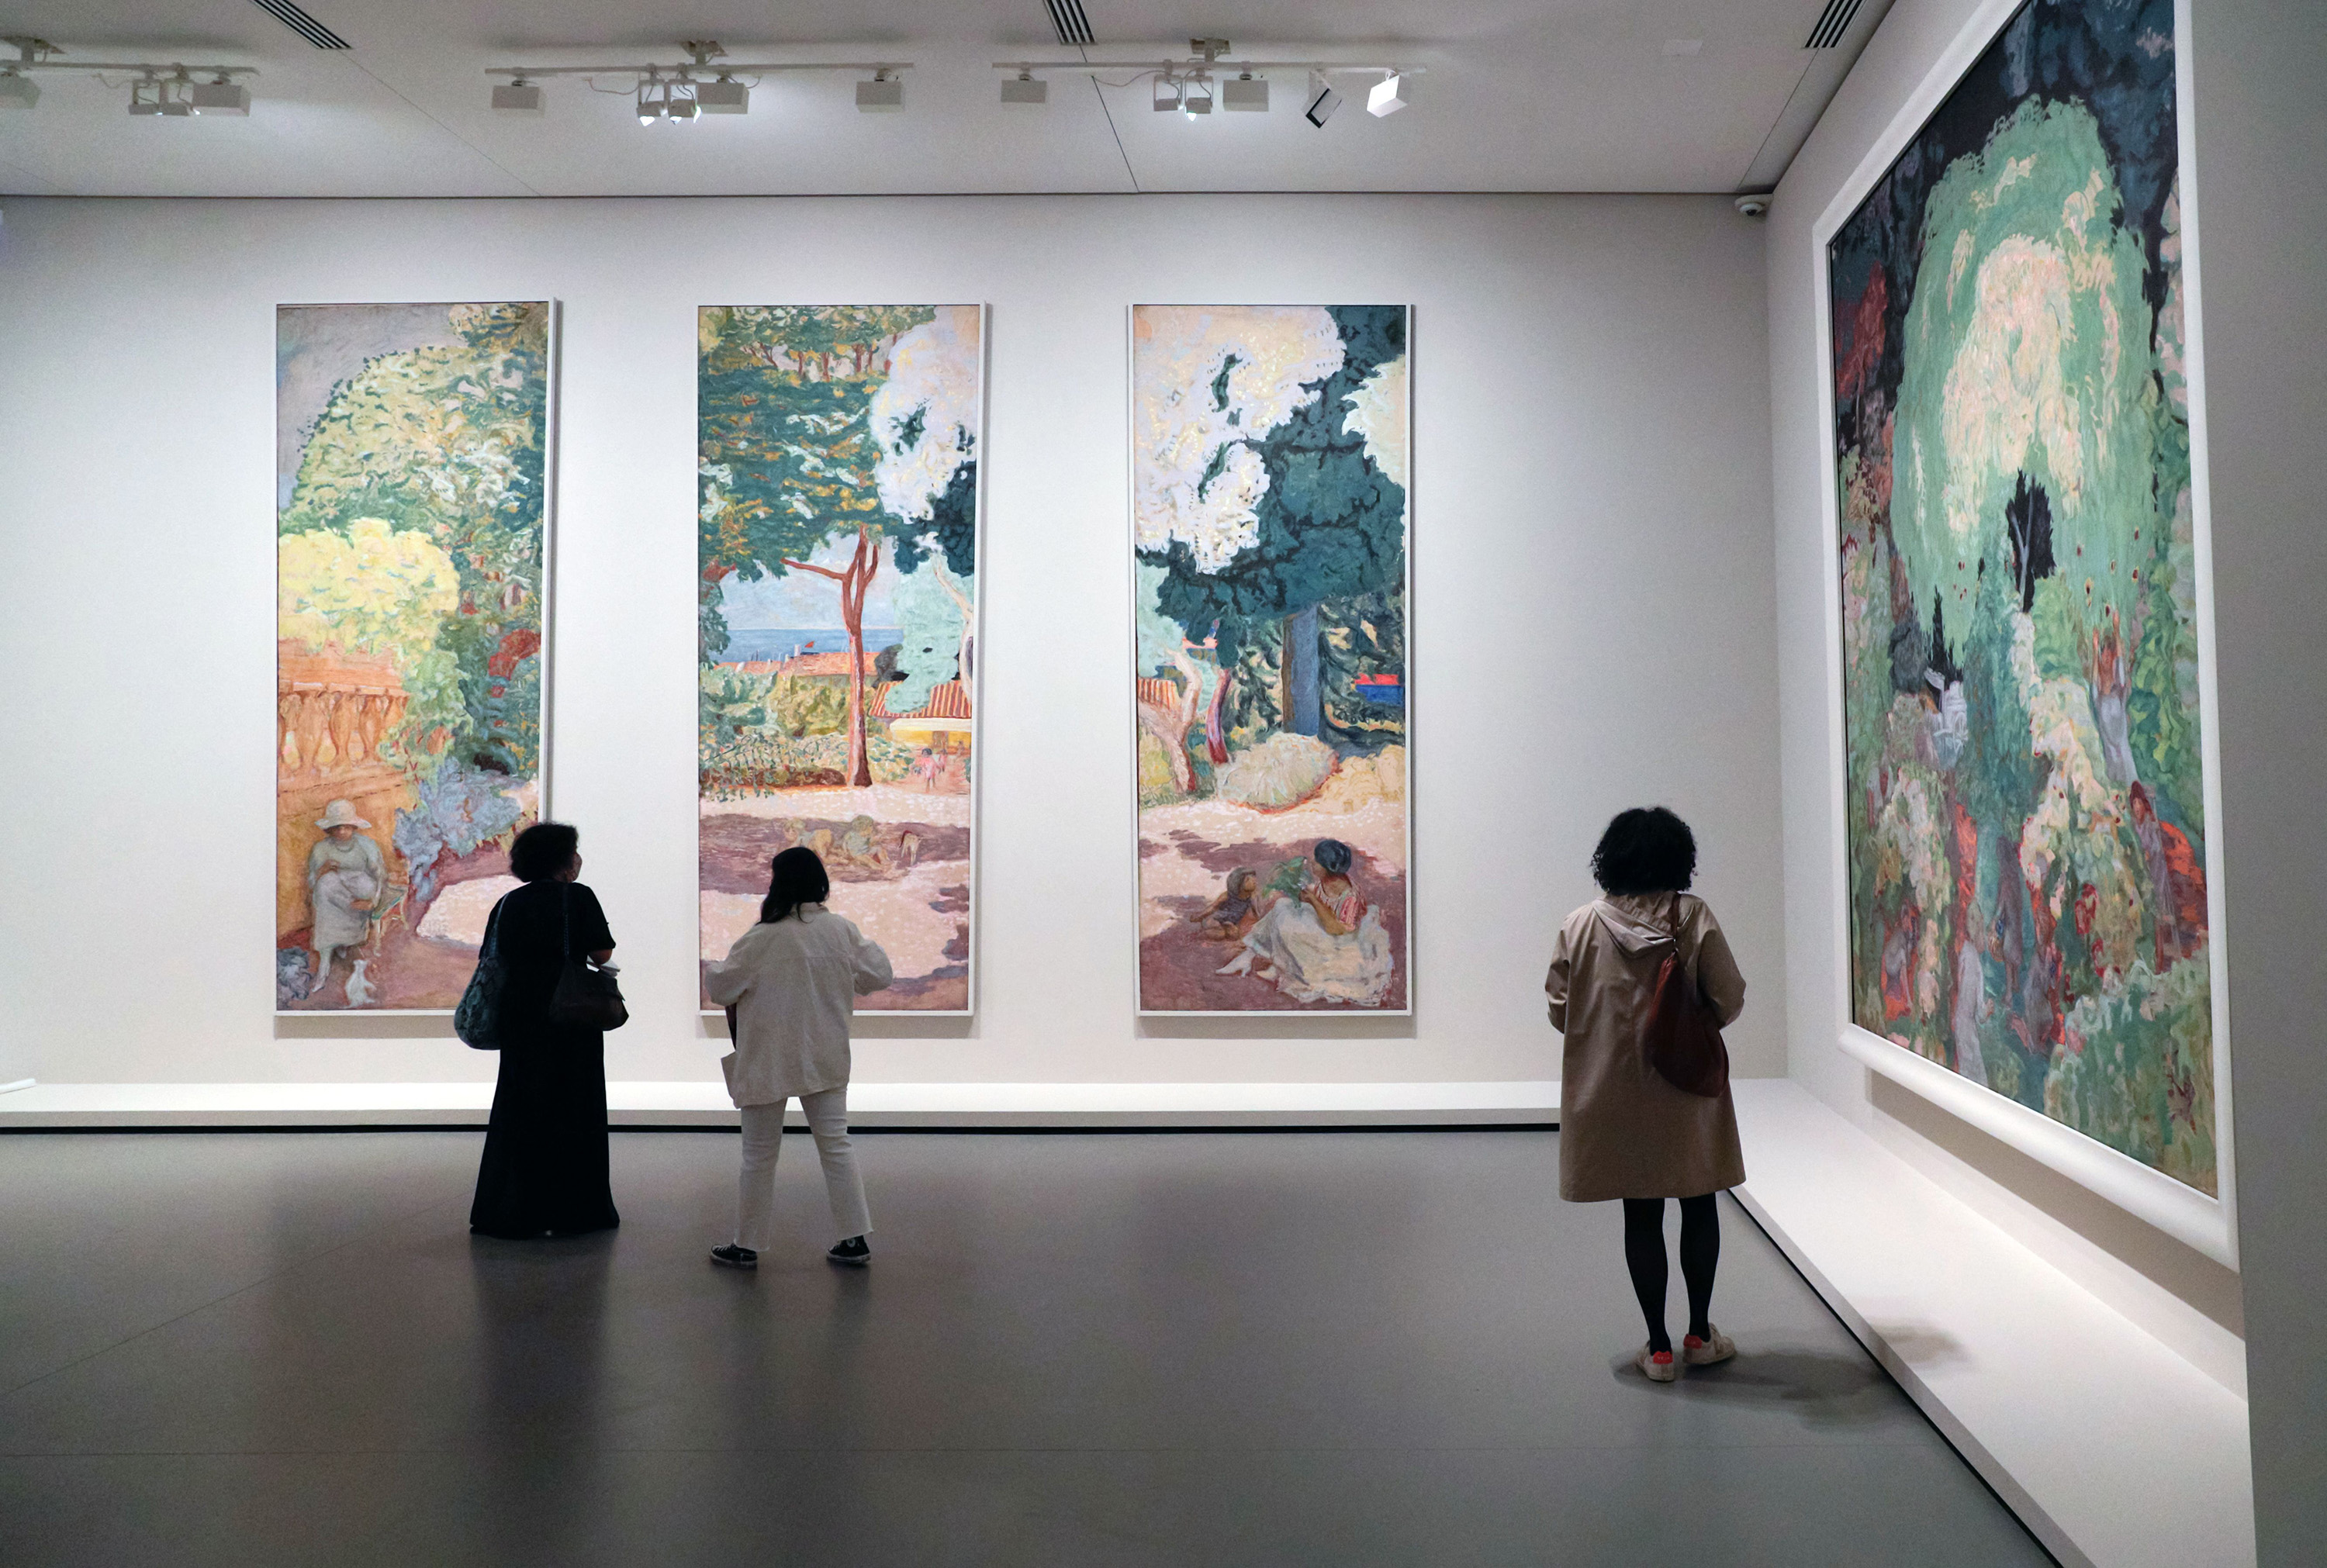 New Paris museum to house billionaire's modern art collection